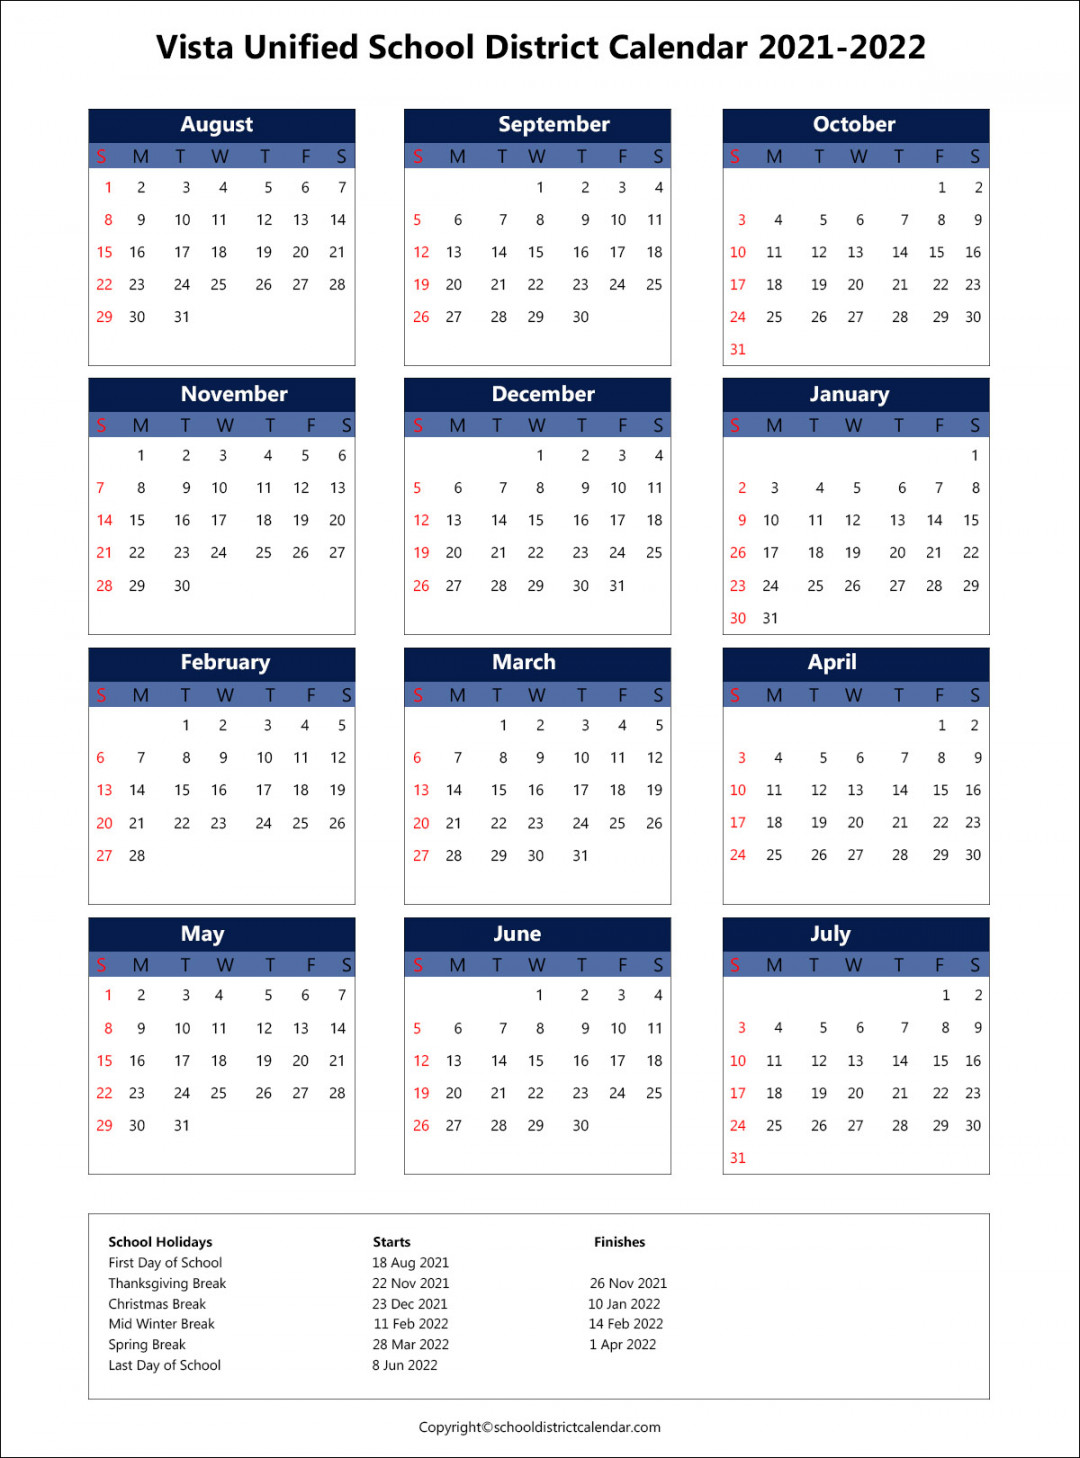 Vista Unified School District Calendar Holidays -